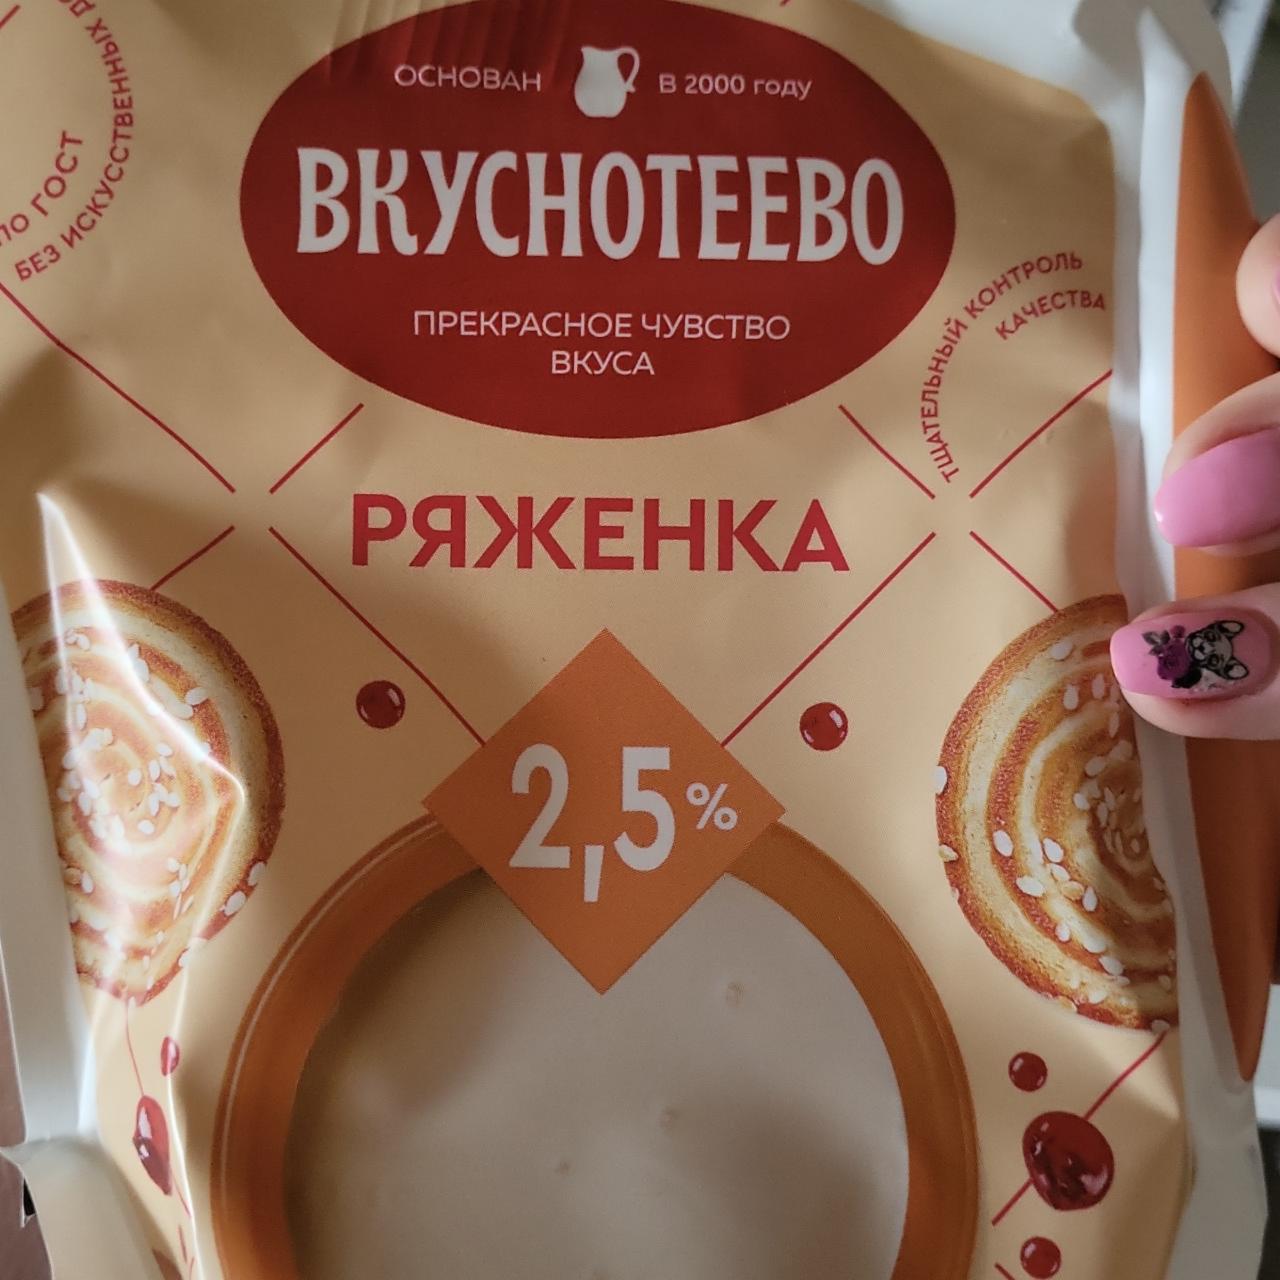 Фото - ряженка 2.5% Вкуснотеево